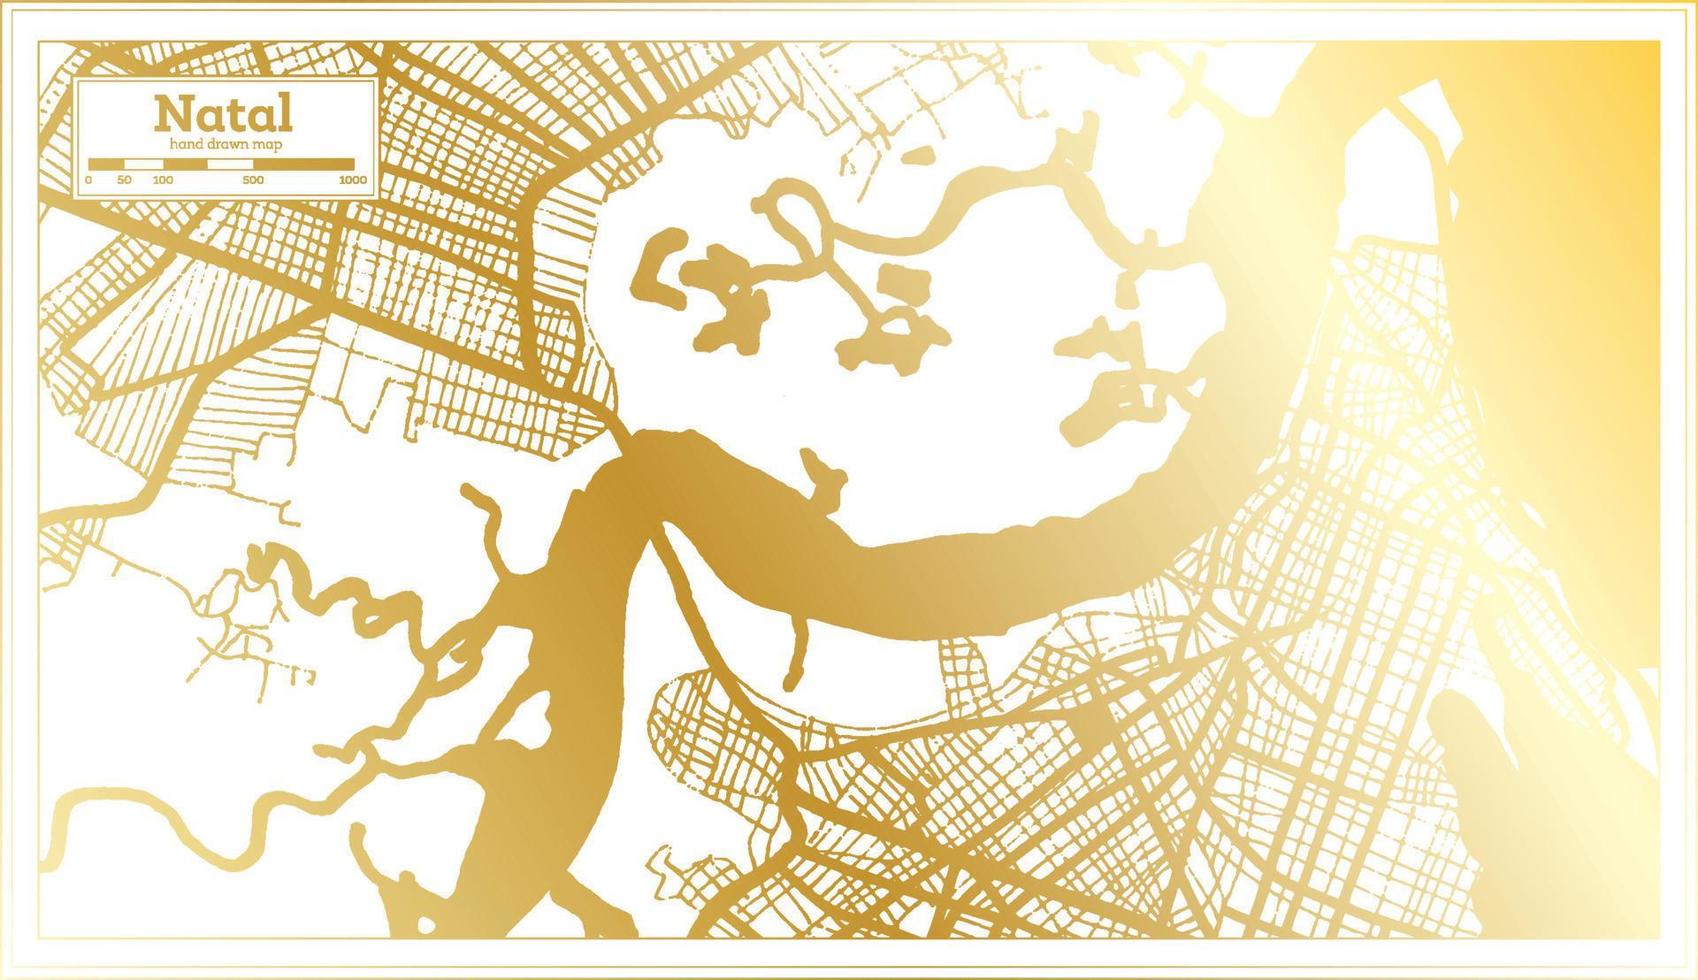 Natal Brasilien Stadtplan im Retro-Stil in goldener Farbe. Übersichtskarte. vektor